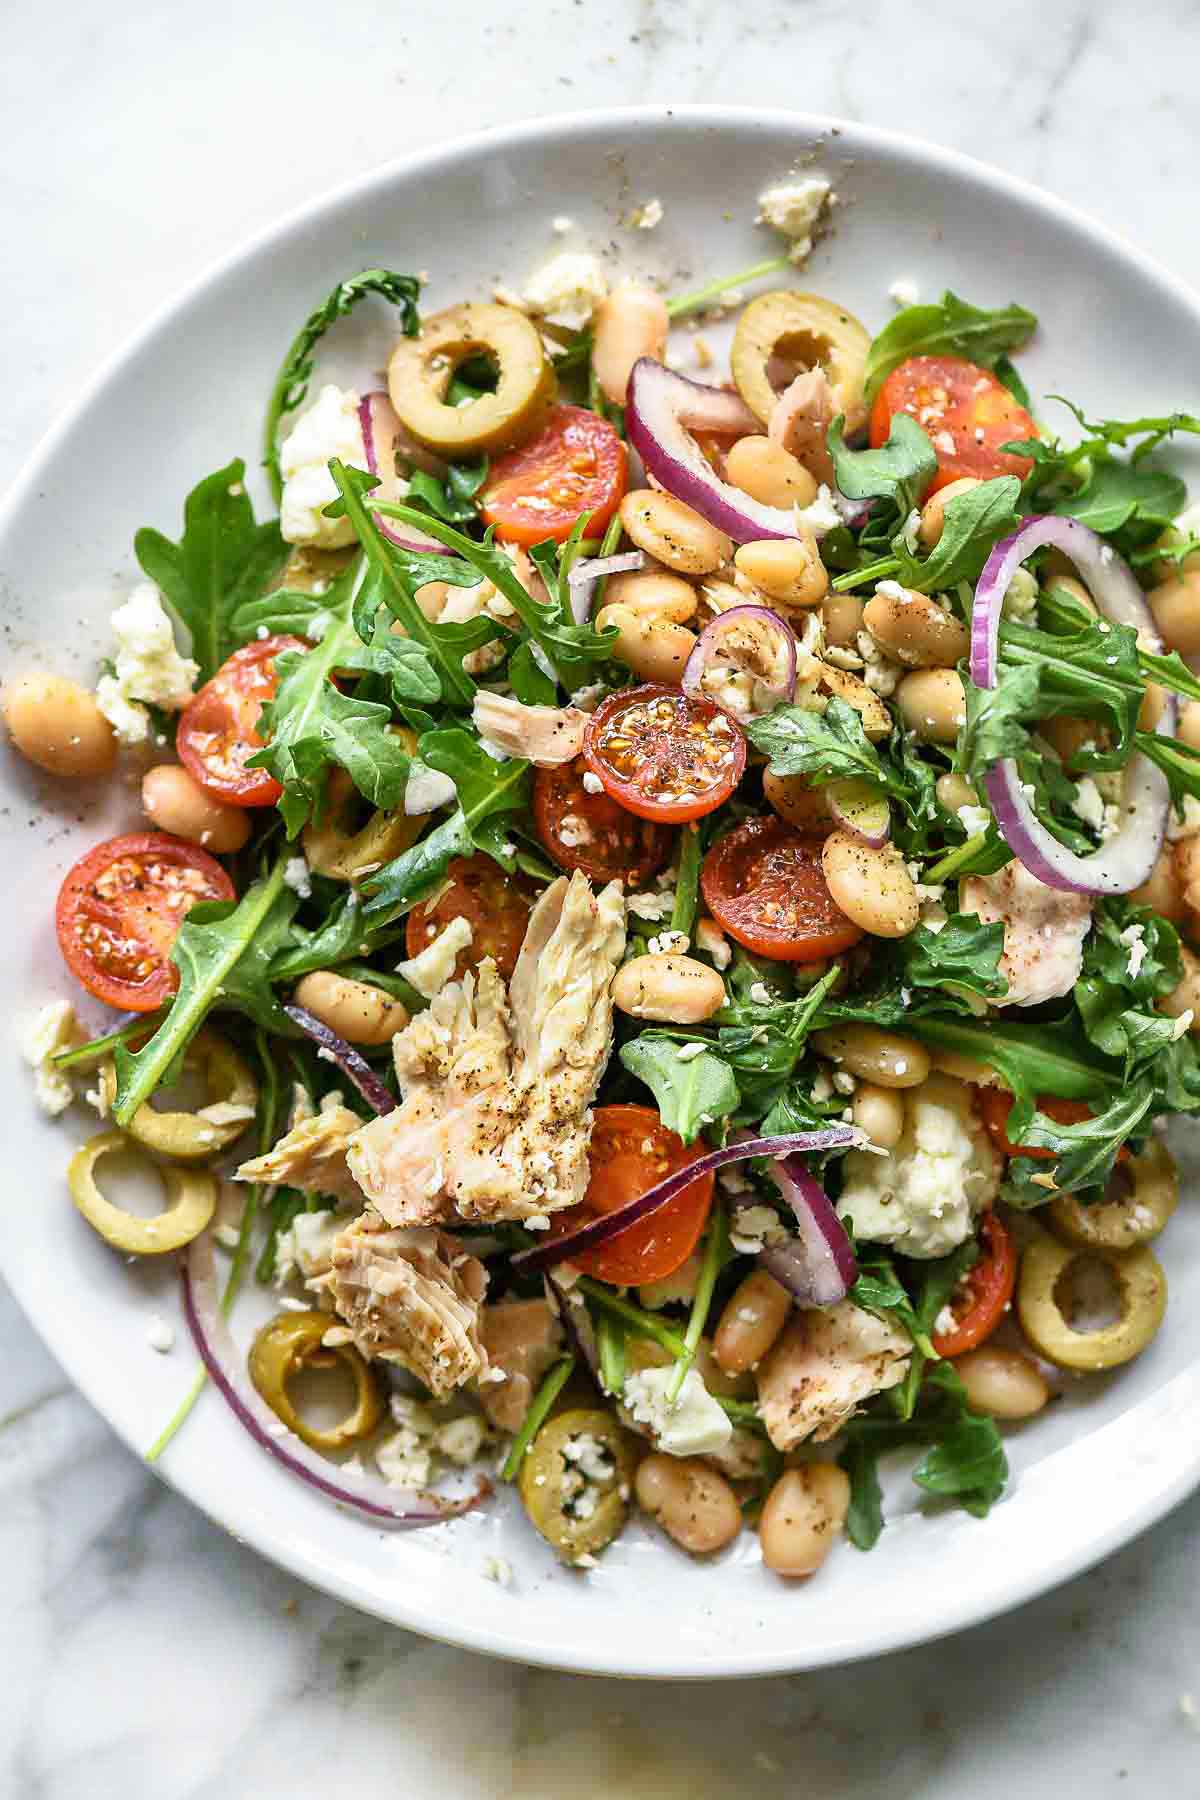 https://www.foodiecrush.com/tuscan-tuna-white-bean-salad/tuscan-tuna-and-arugula-salad-foodiecrush-com-018/